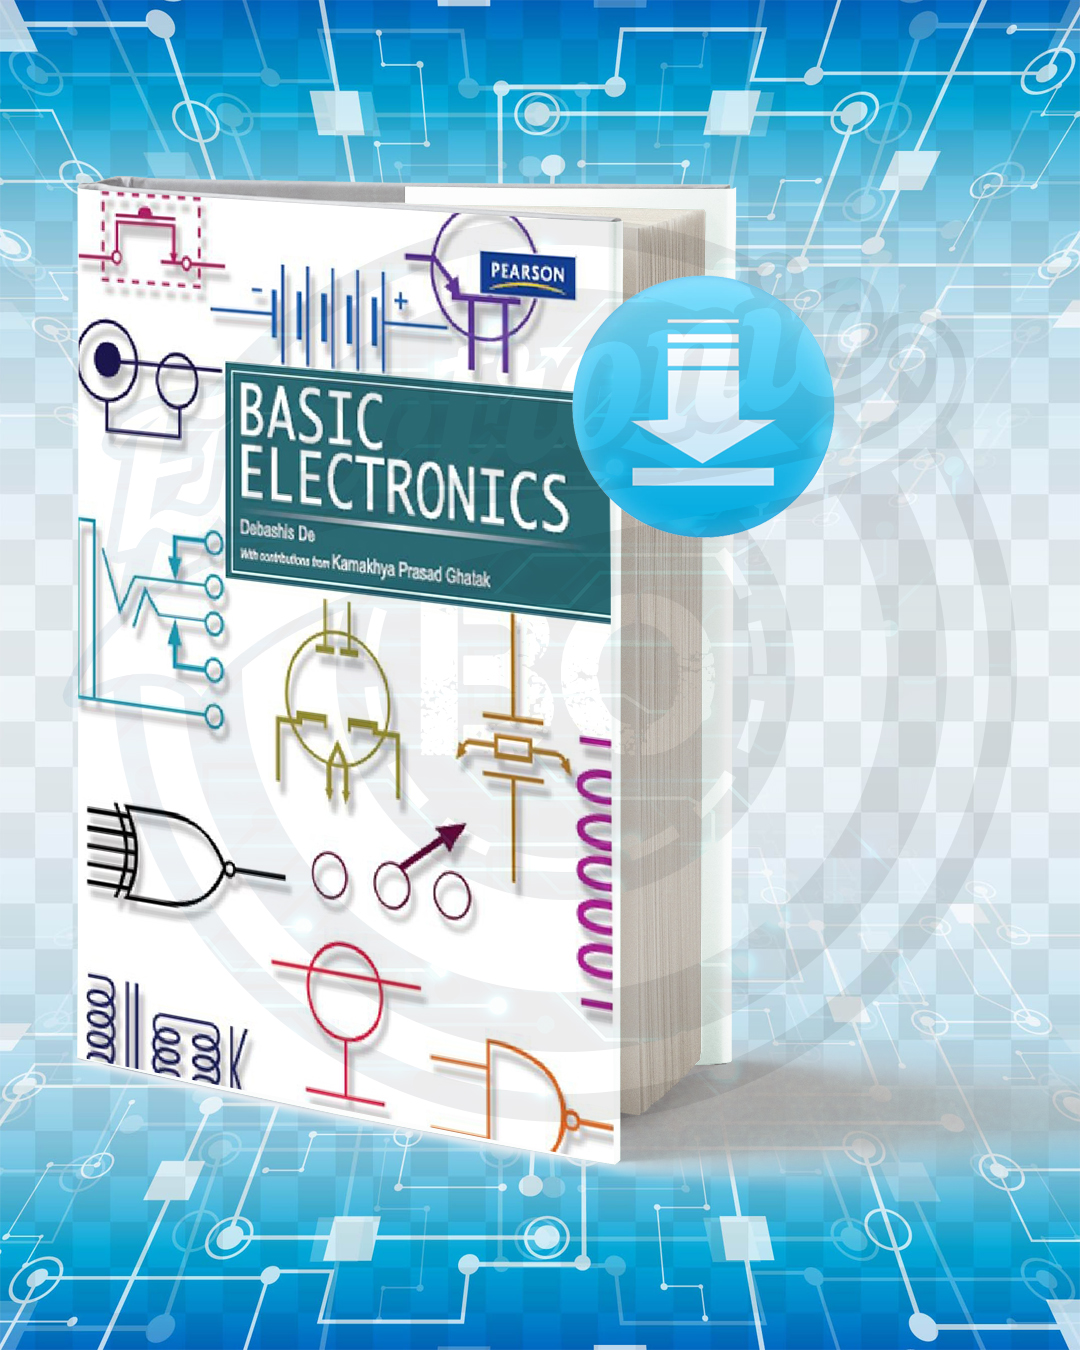 grobs basic electronics 12th edition pdf free download